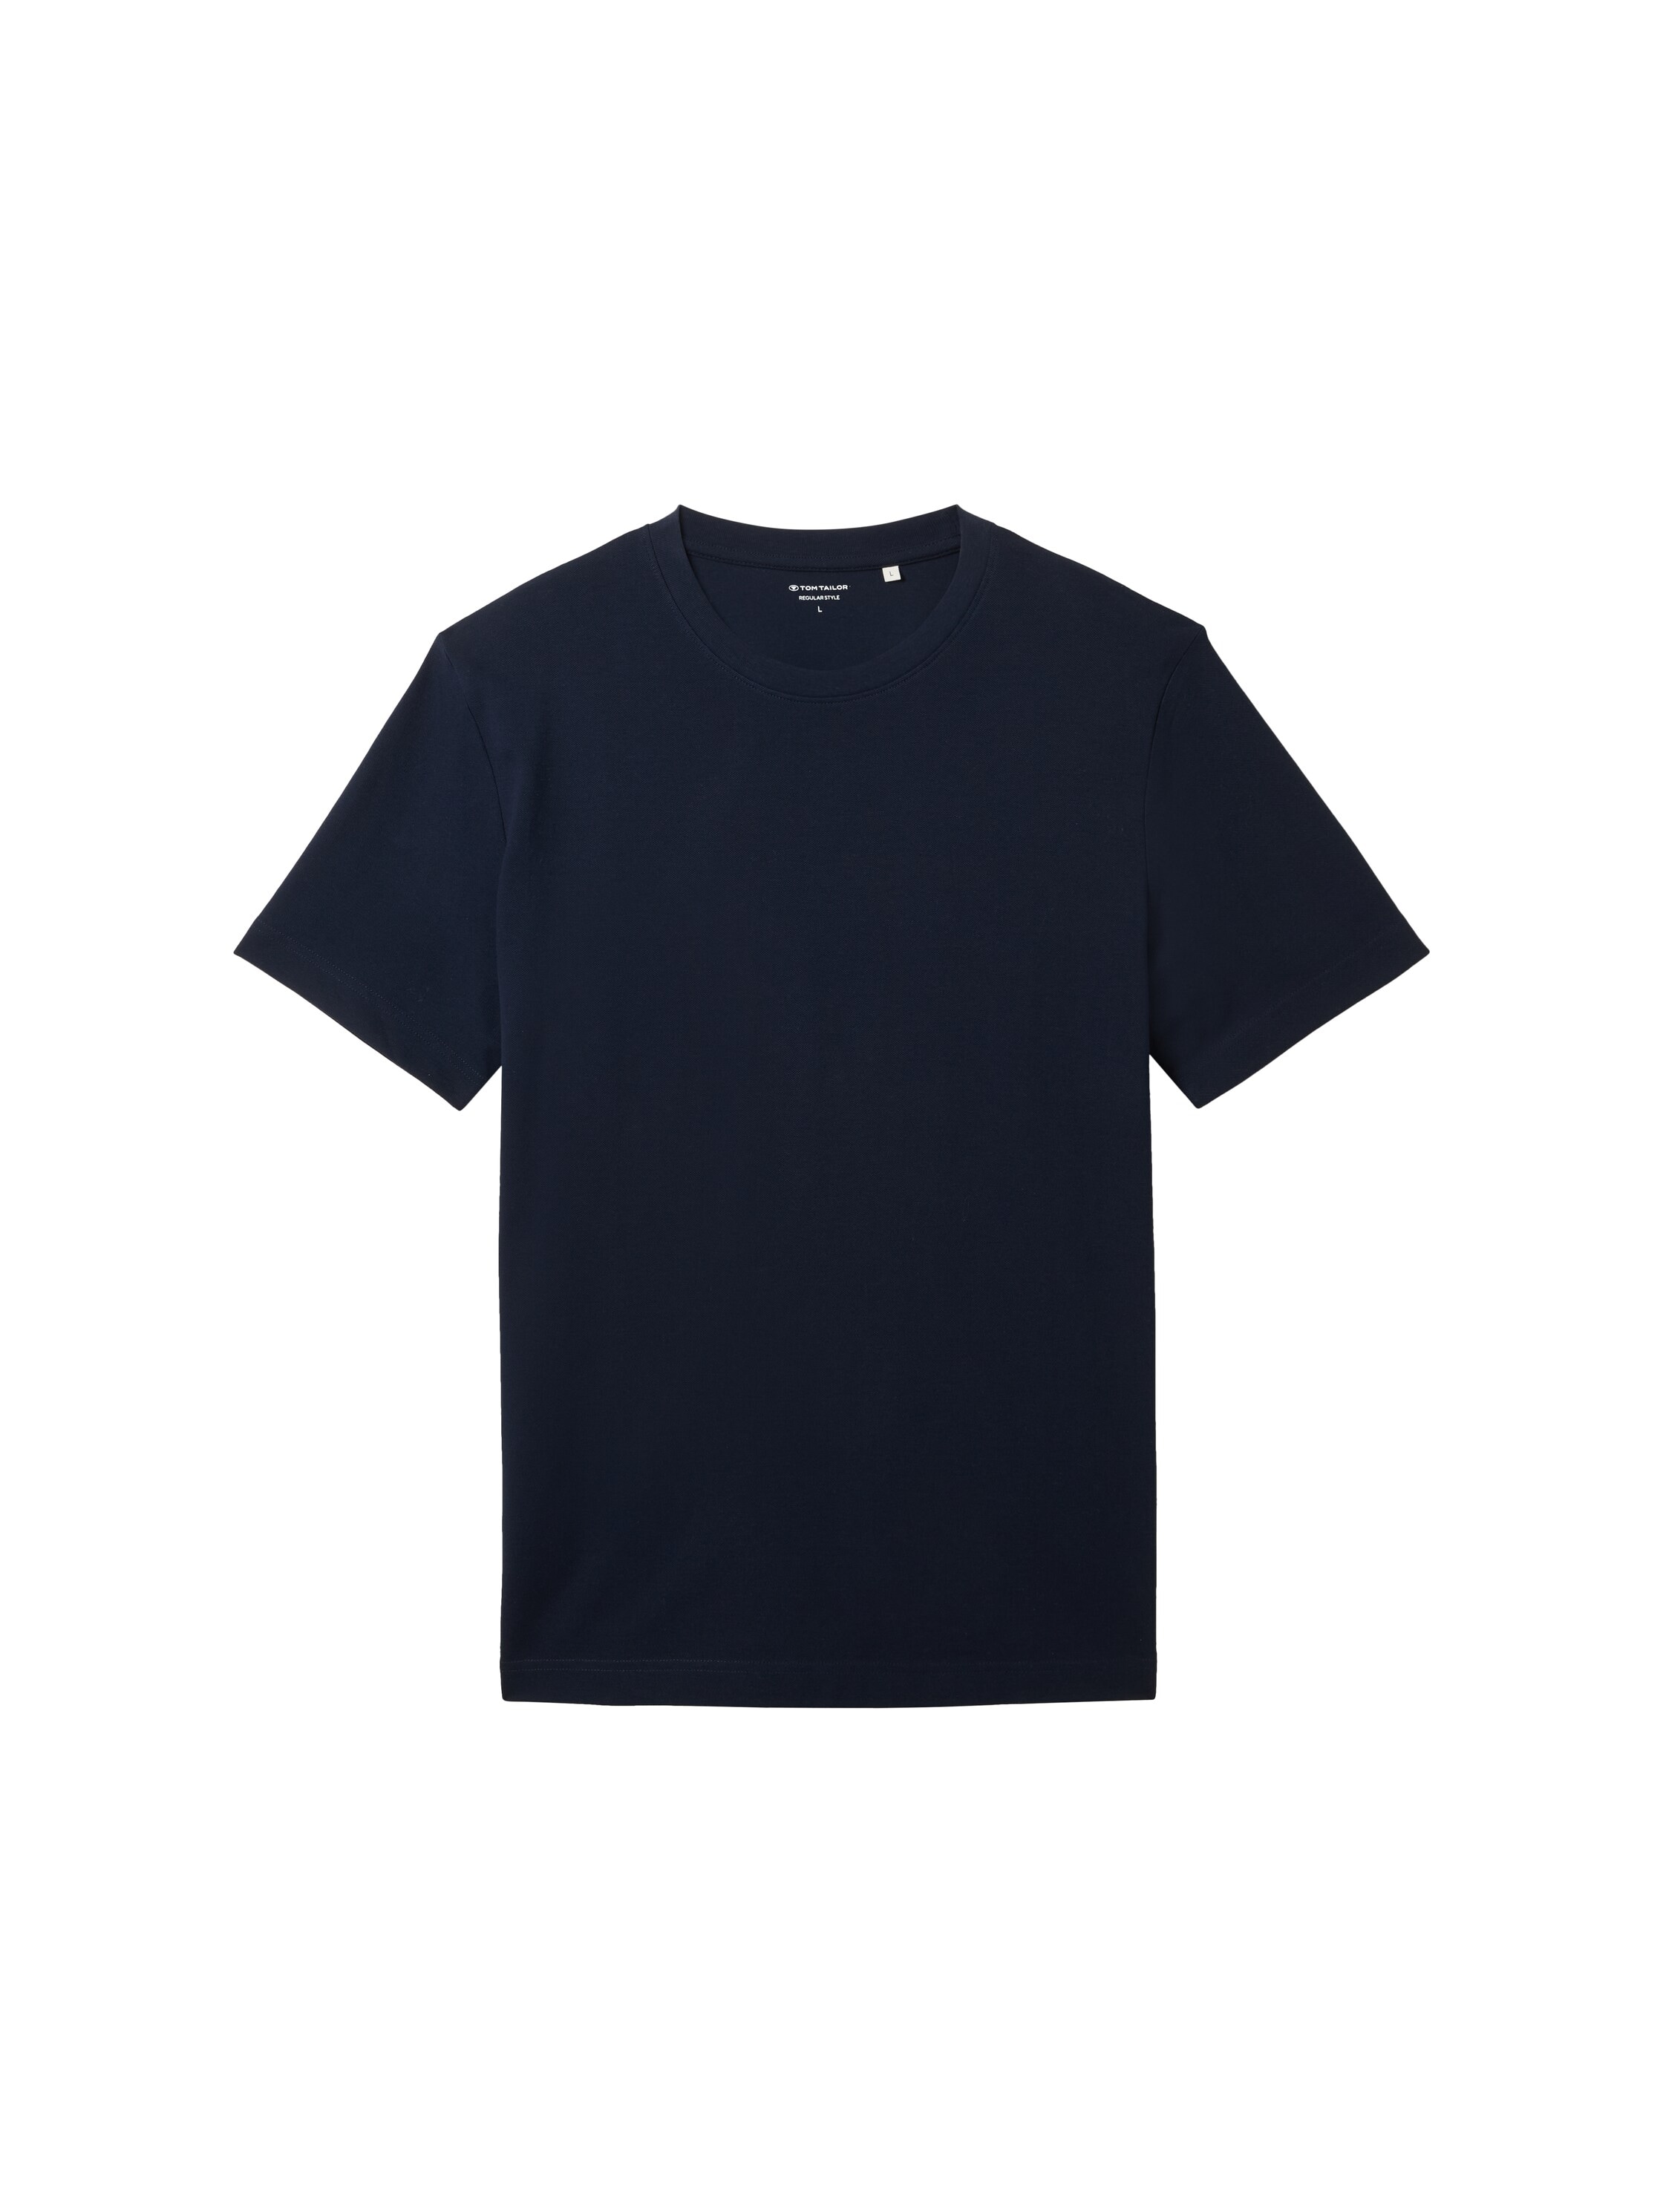 TOM TAILOR T-Shirt, mit Pique Struktur